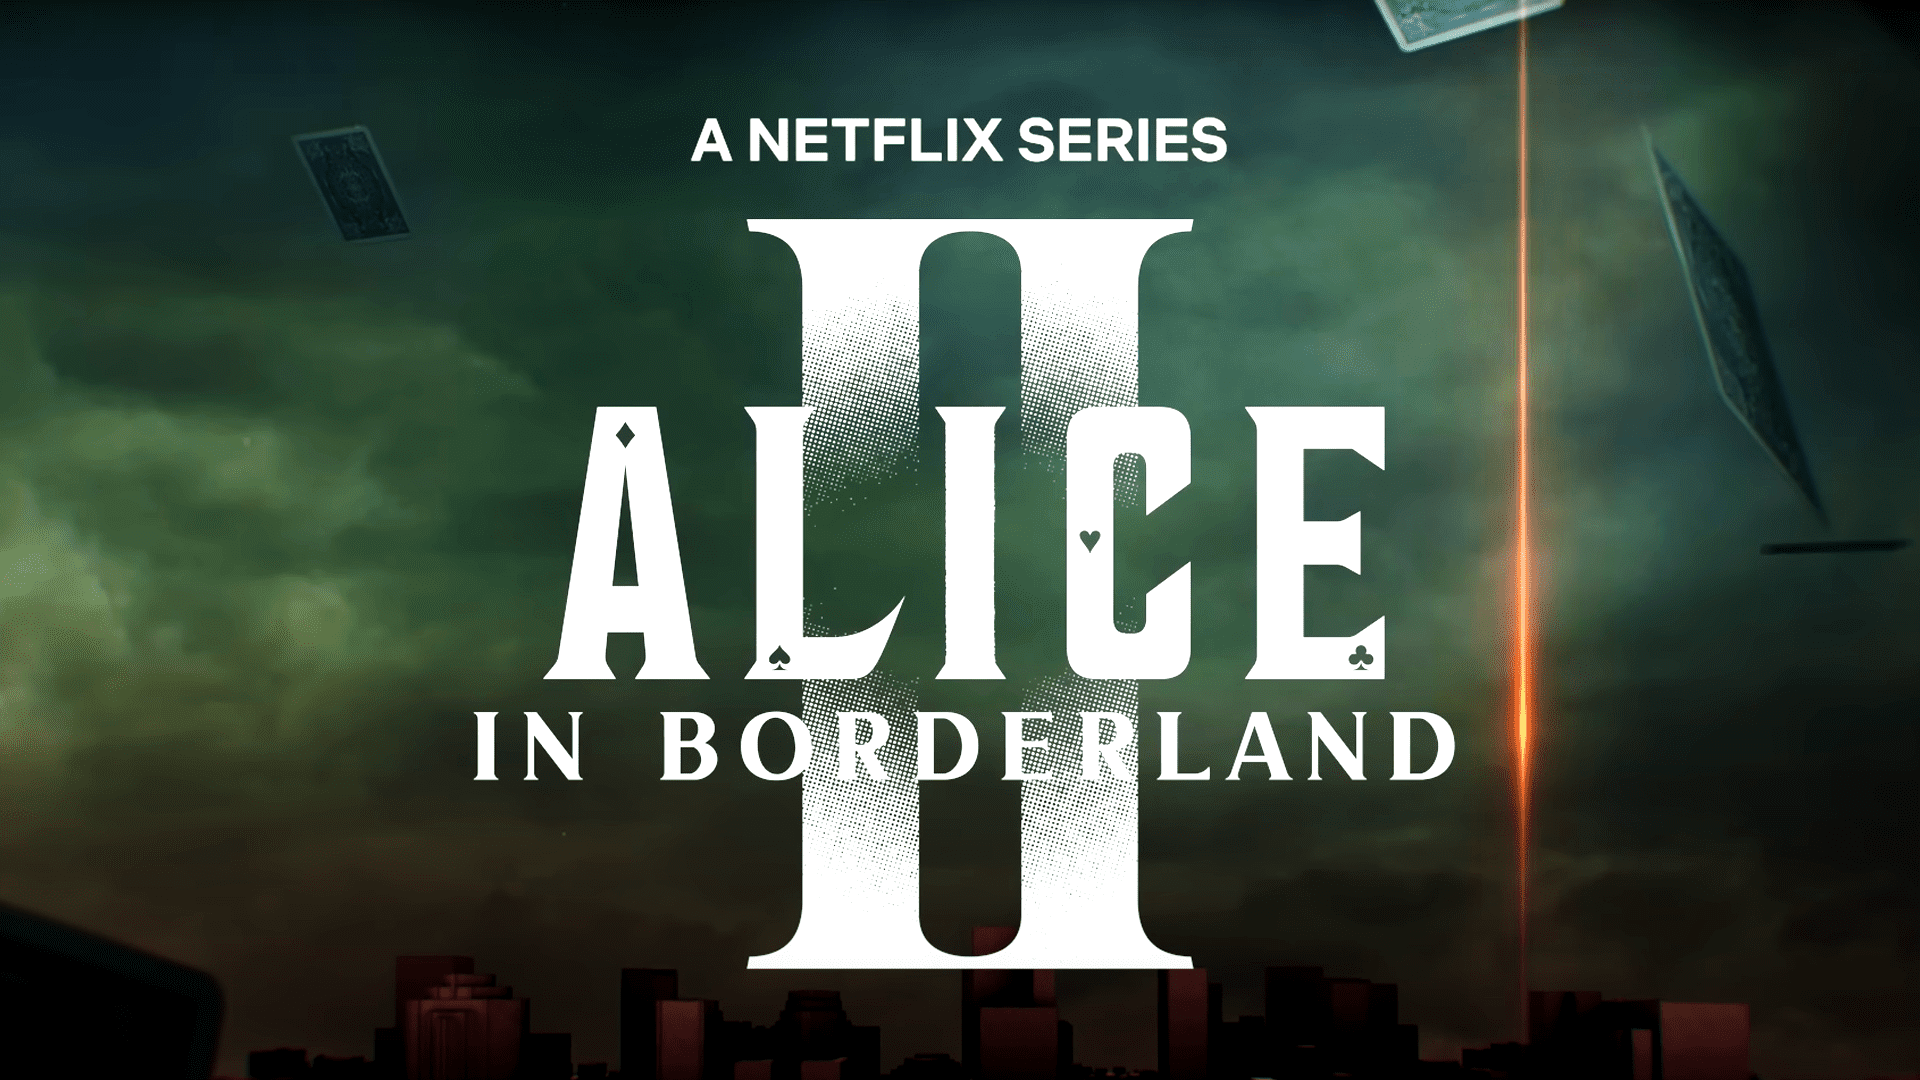 Alice in Borderland Season 2 trailer